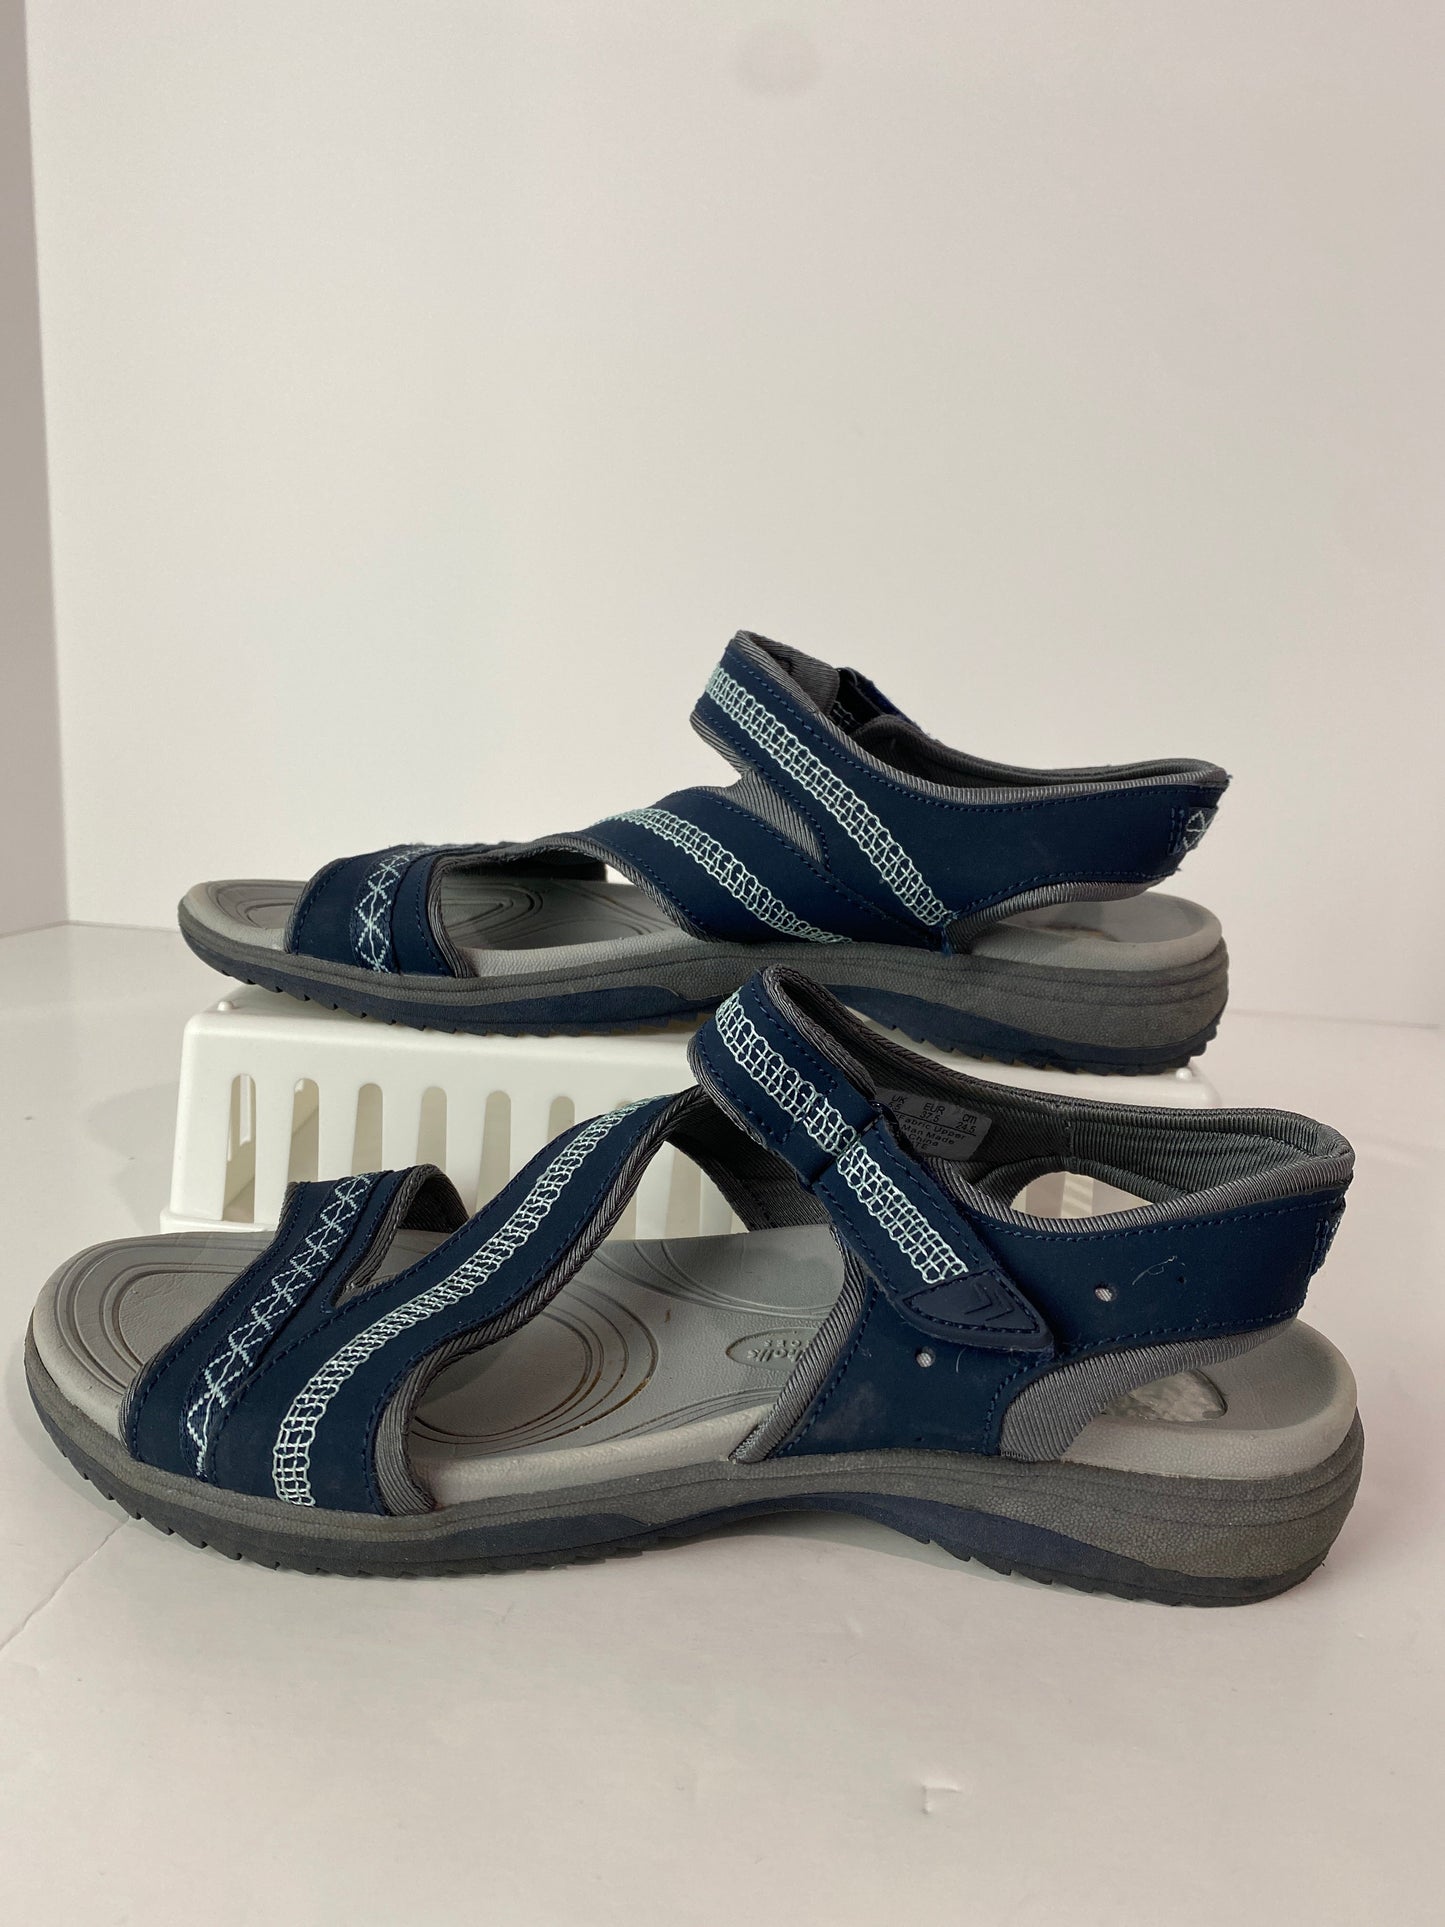 Navy Sandals Flats Dr Scholls, Size 7.5